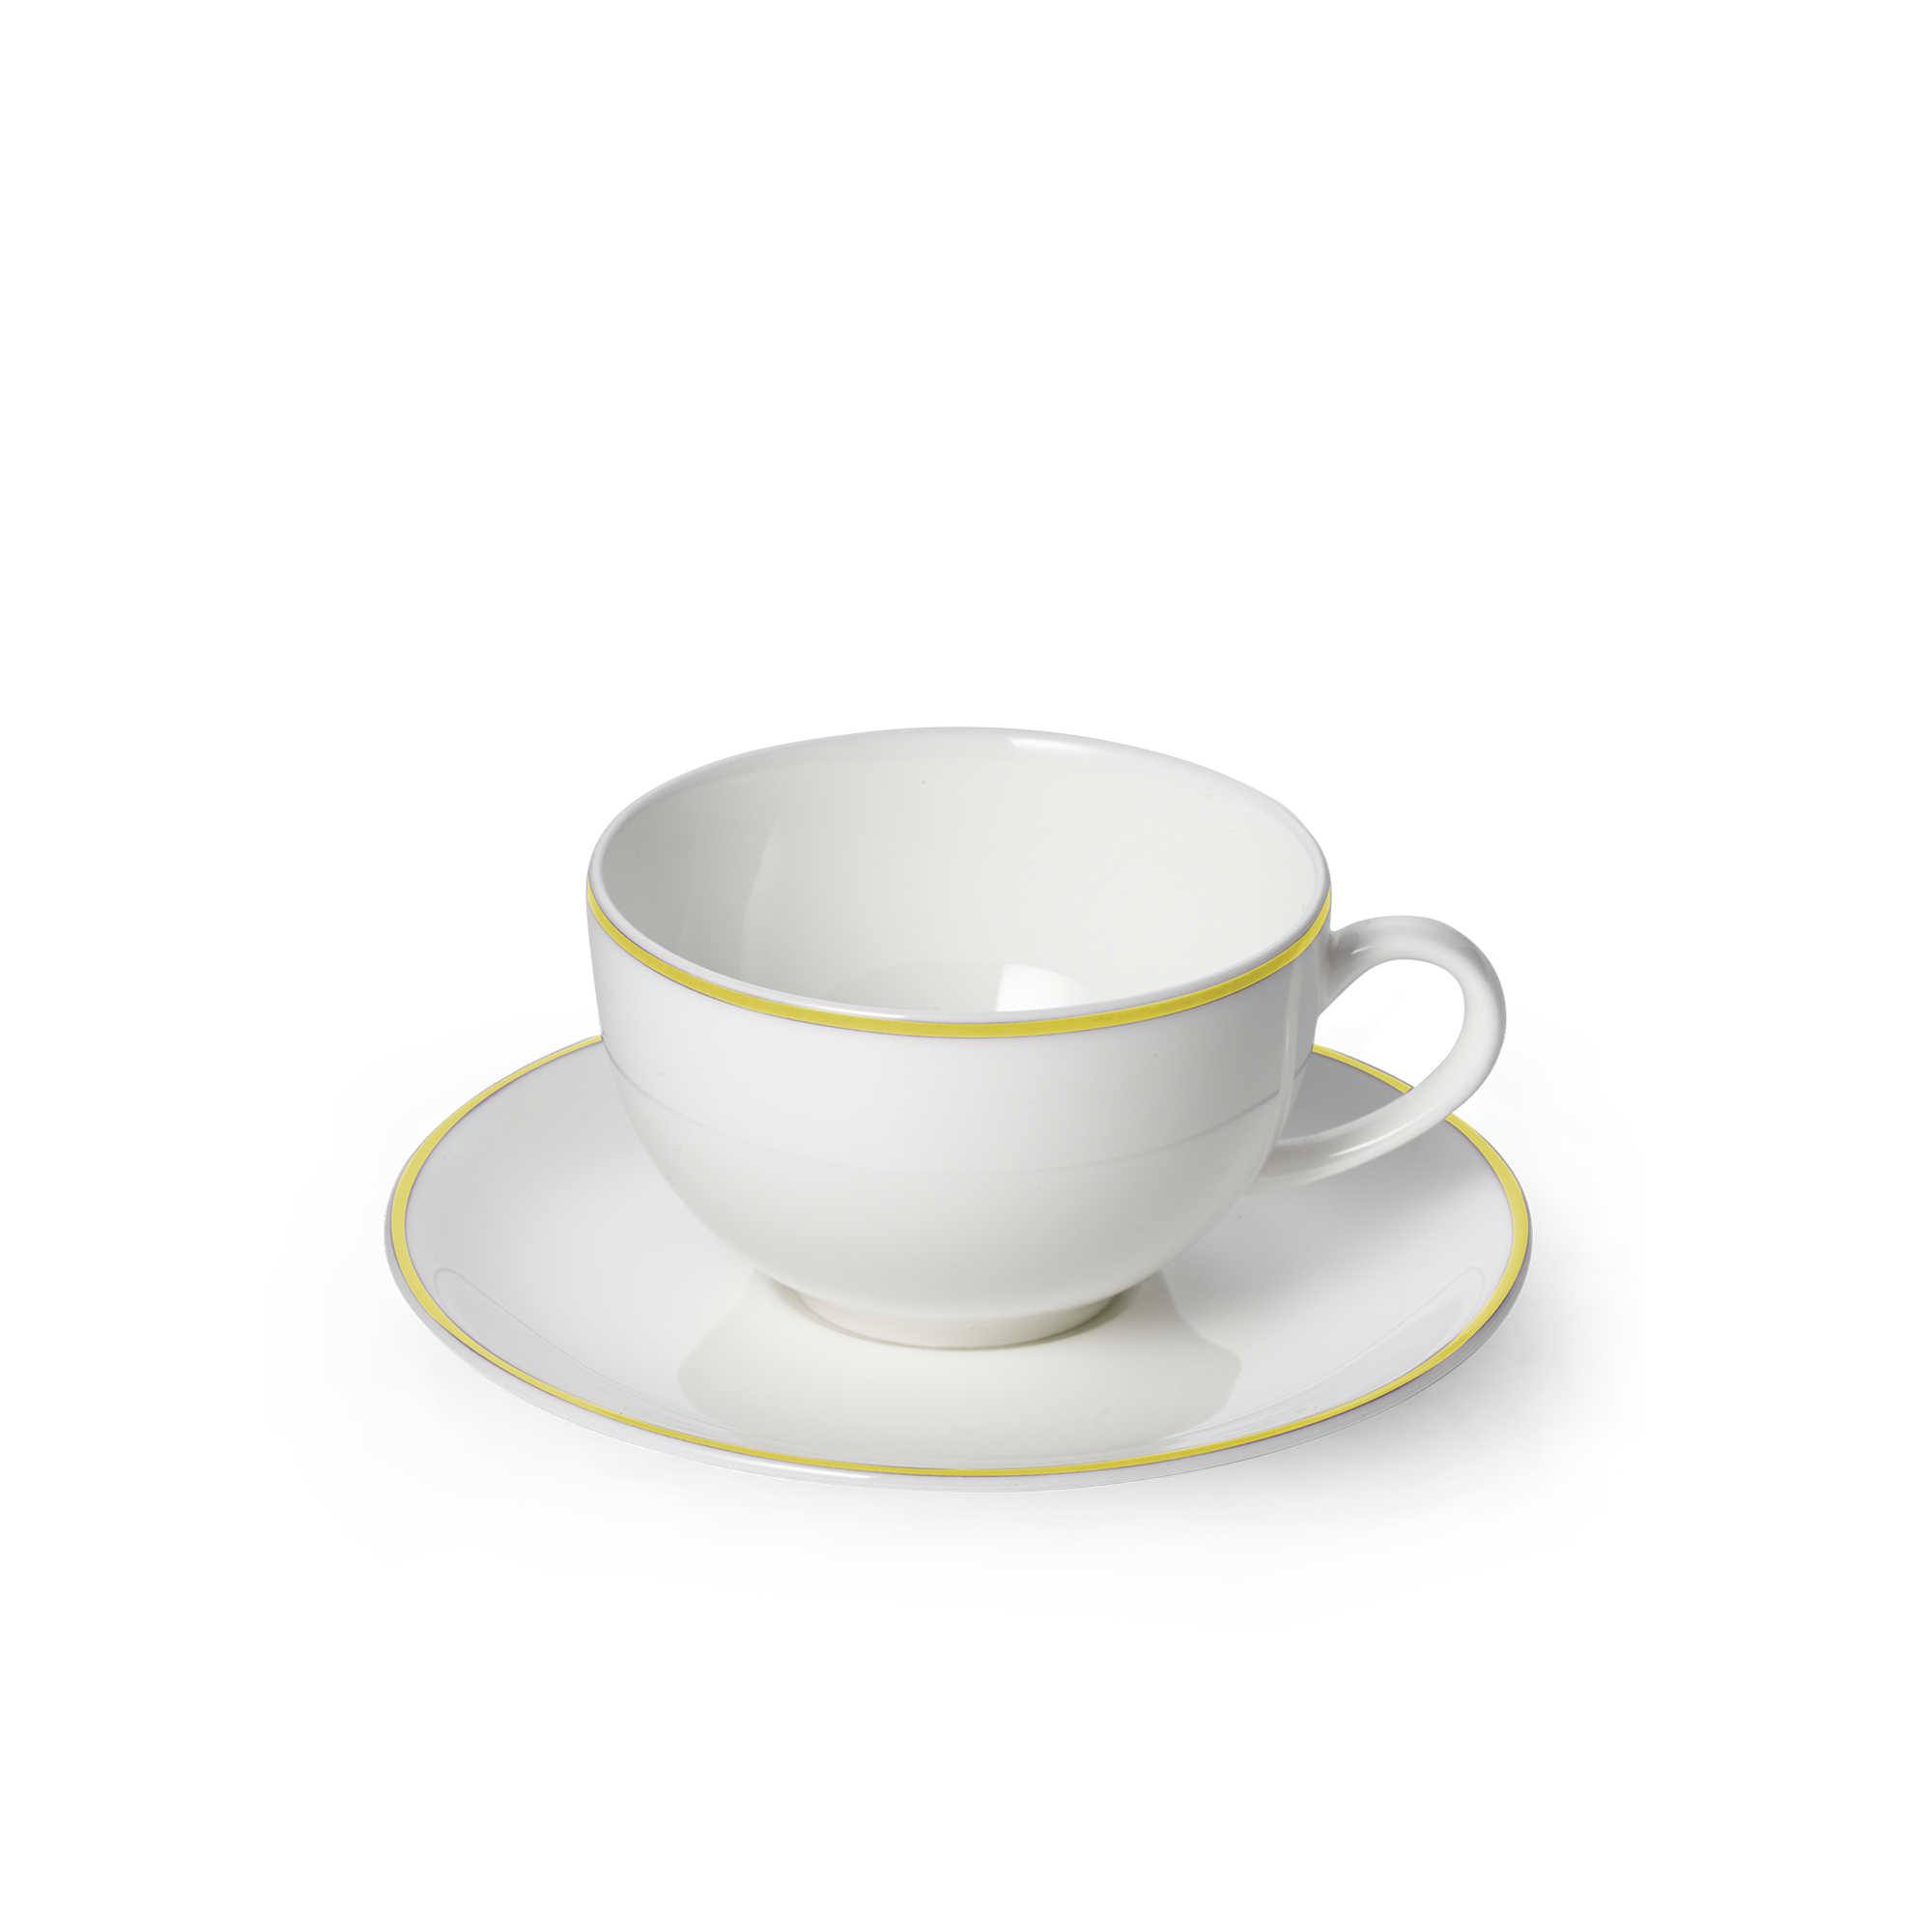 Simplicity coffee mug yellow